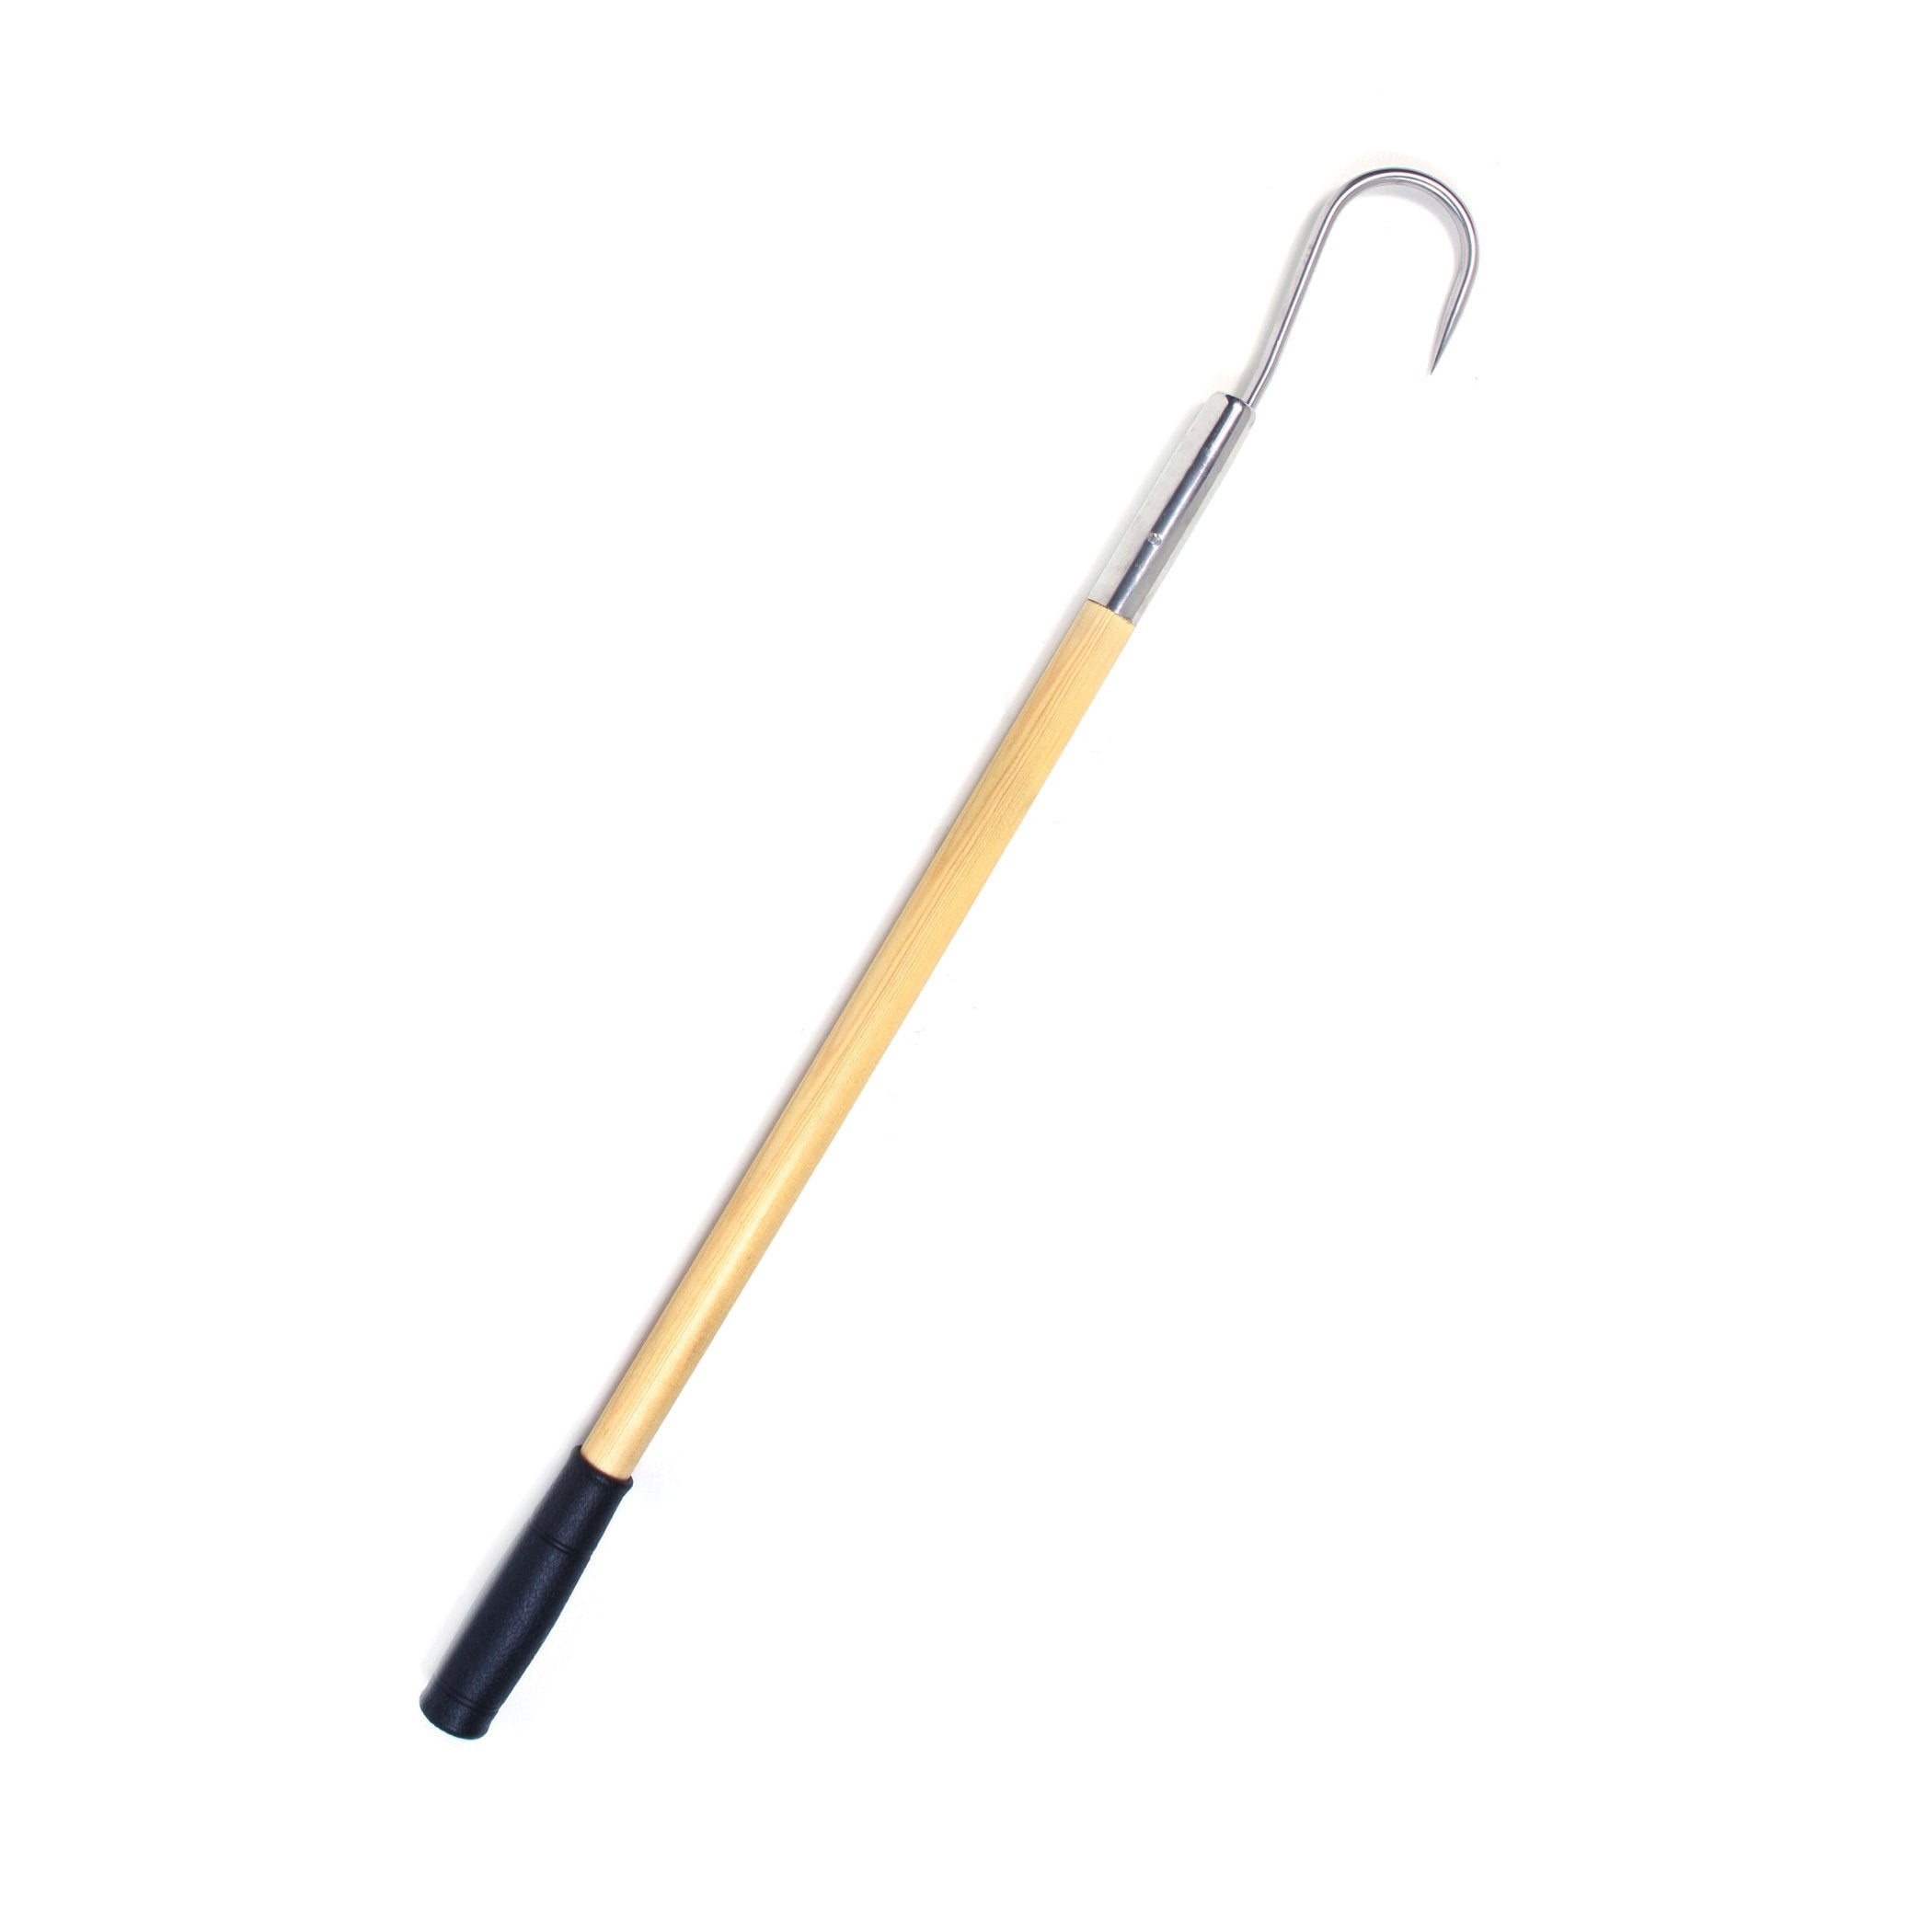  GAFFER SPORTFISHING Aluminum Fish Gaff with Sharp Stainless  Steel Fishing Spear Hook, Lightweight Sturdy Fishing Pole